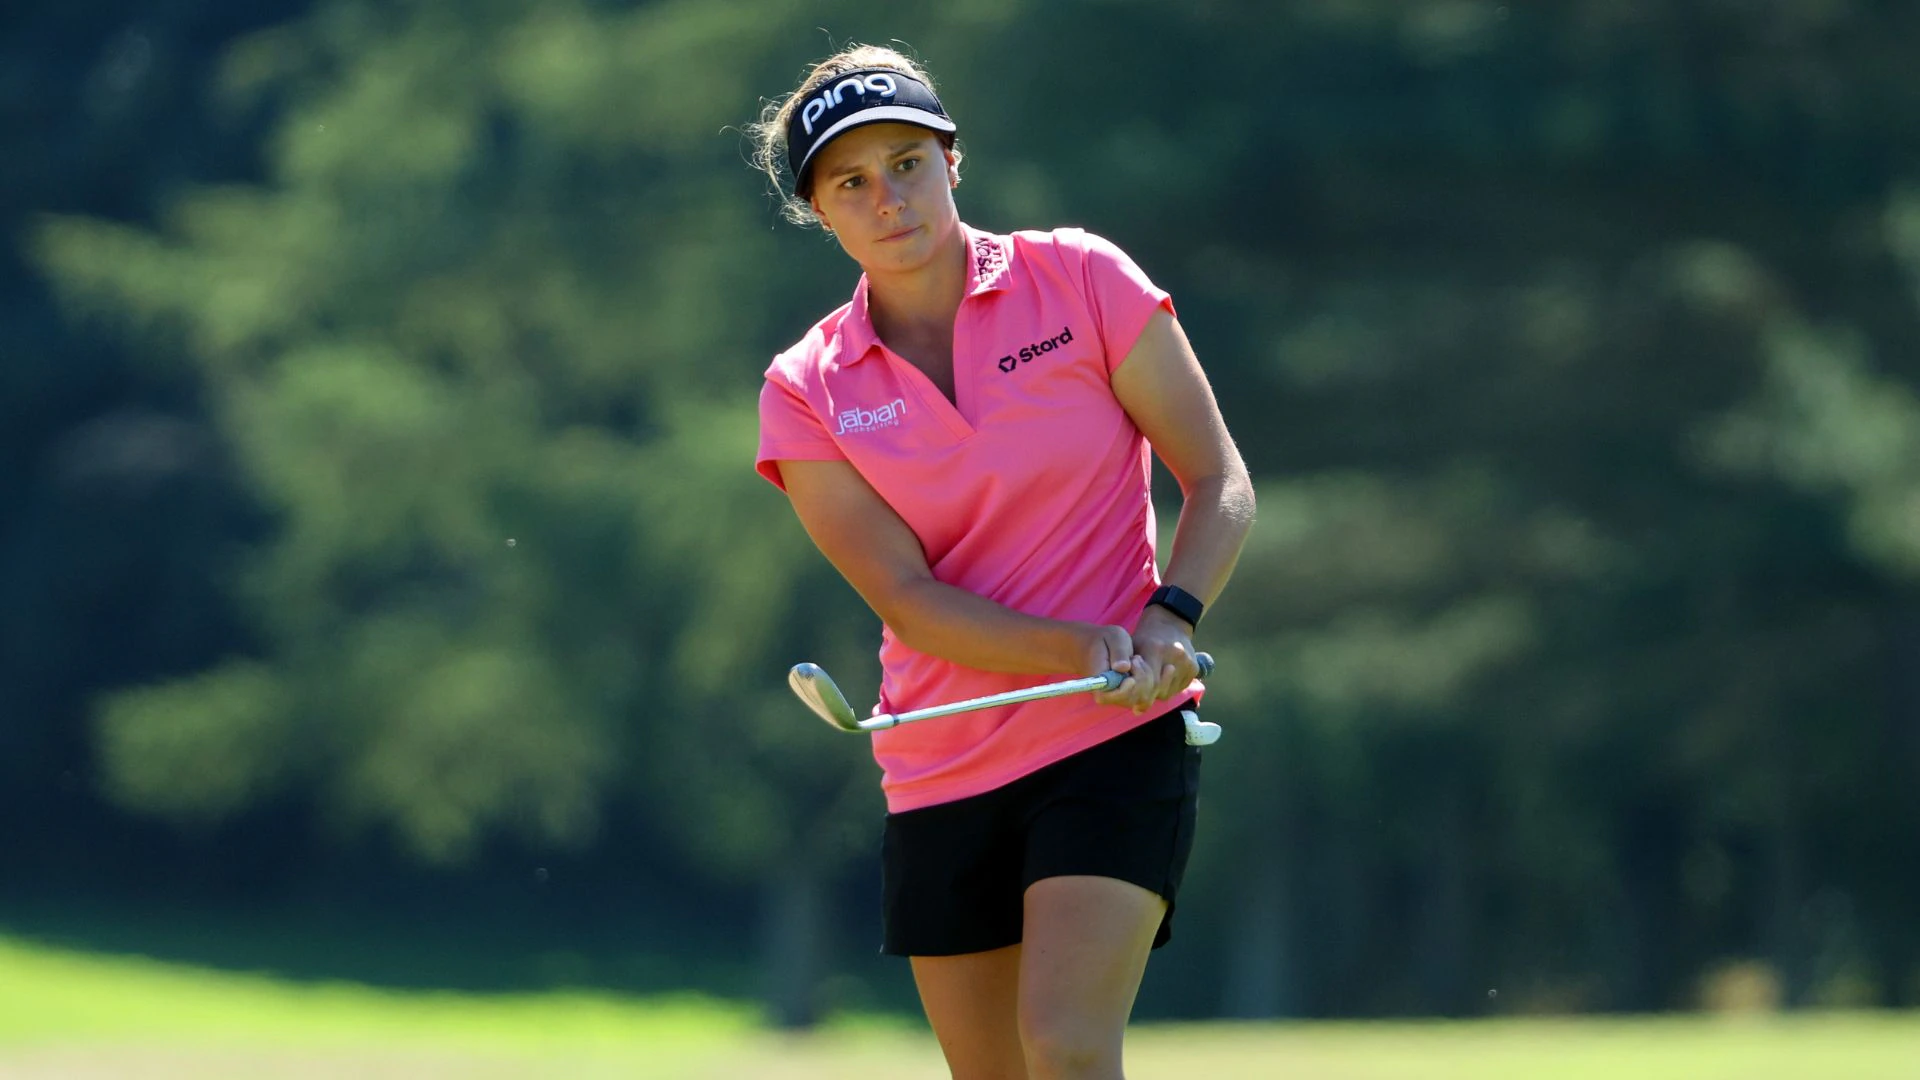 After a long wait in Europe, Amanda Doherty eyes first LPGA win at ISPS Handa